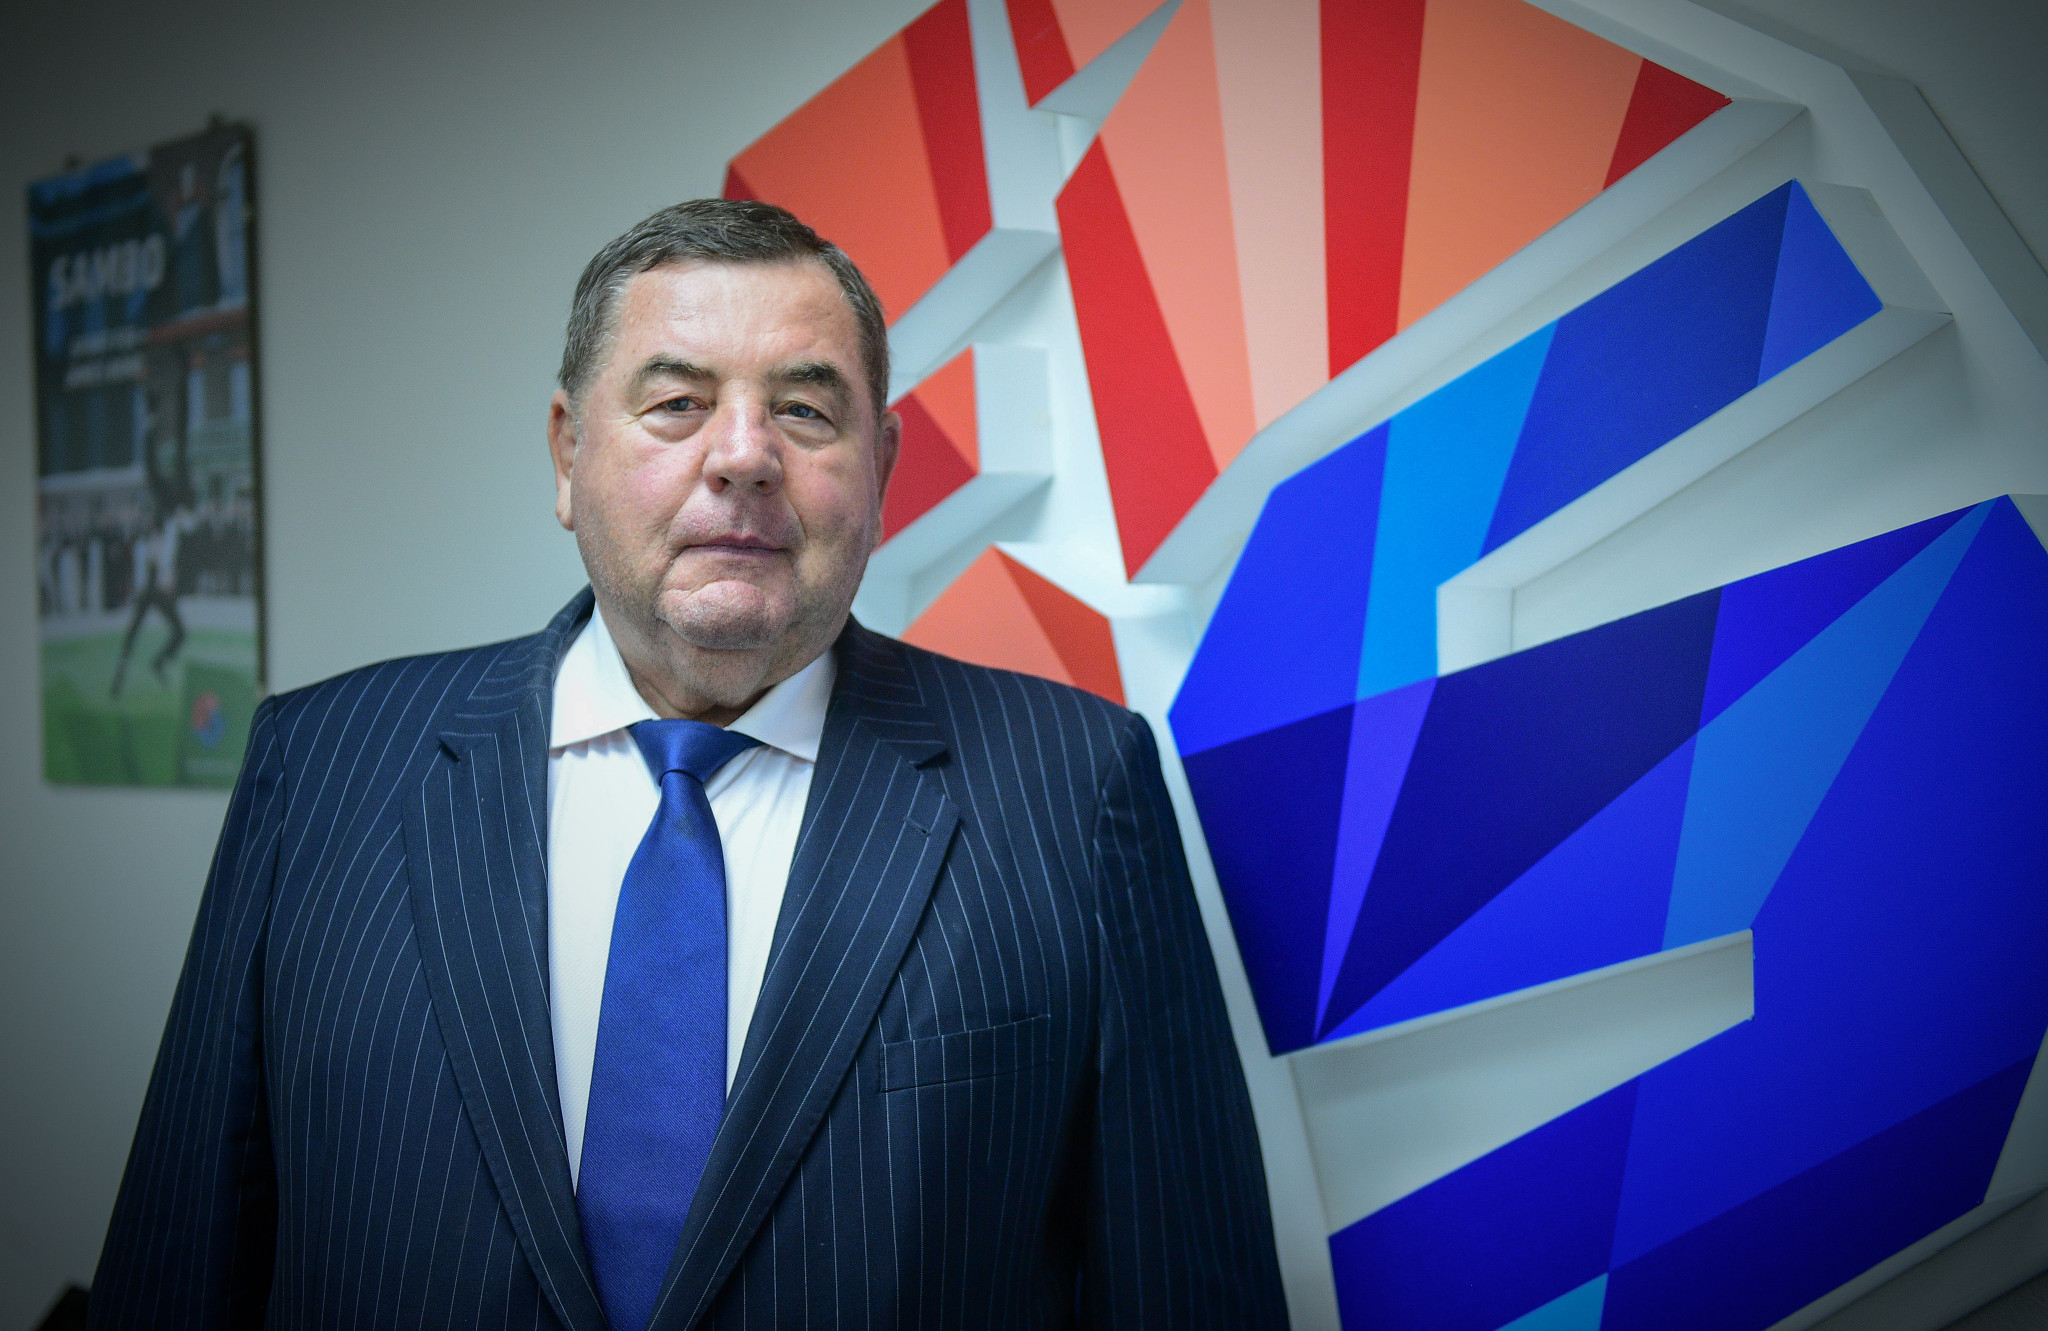 Vasily Shestakov this year had his term as FIAS President extended until 2025 ©FIAS